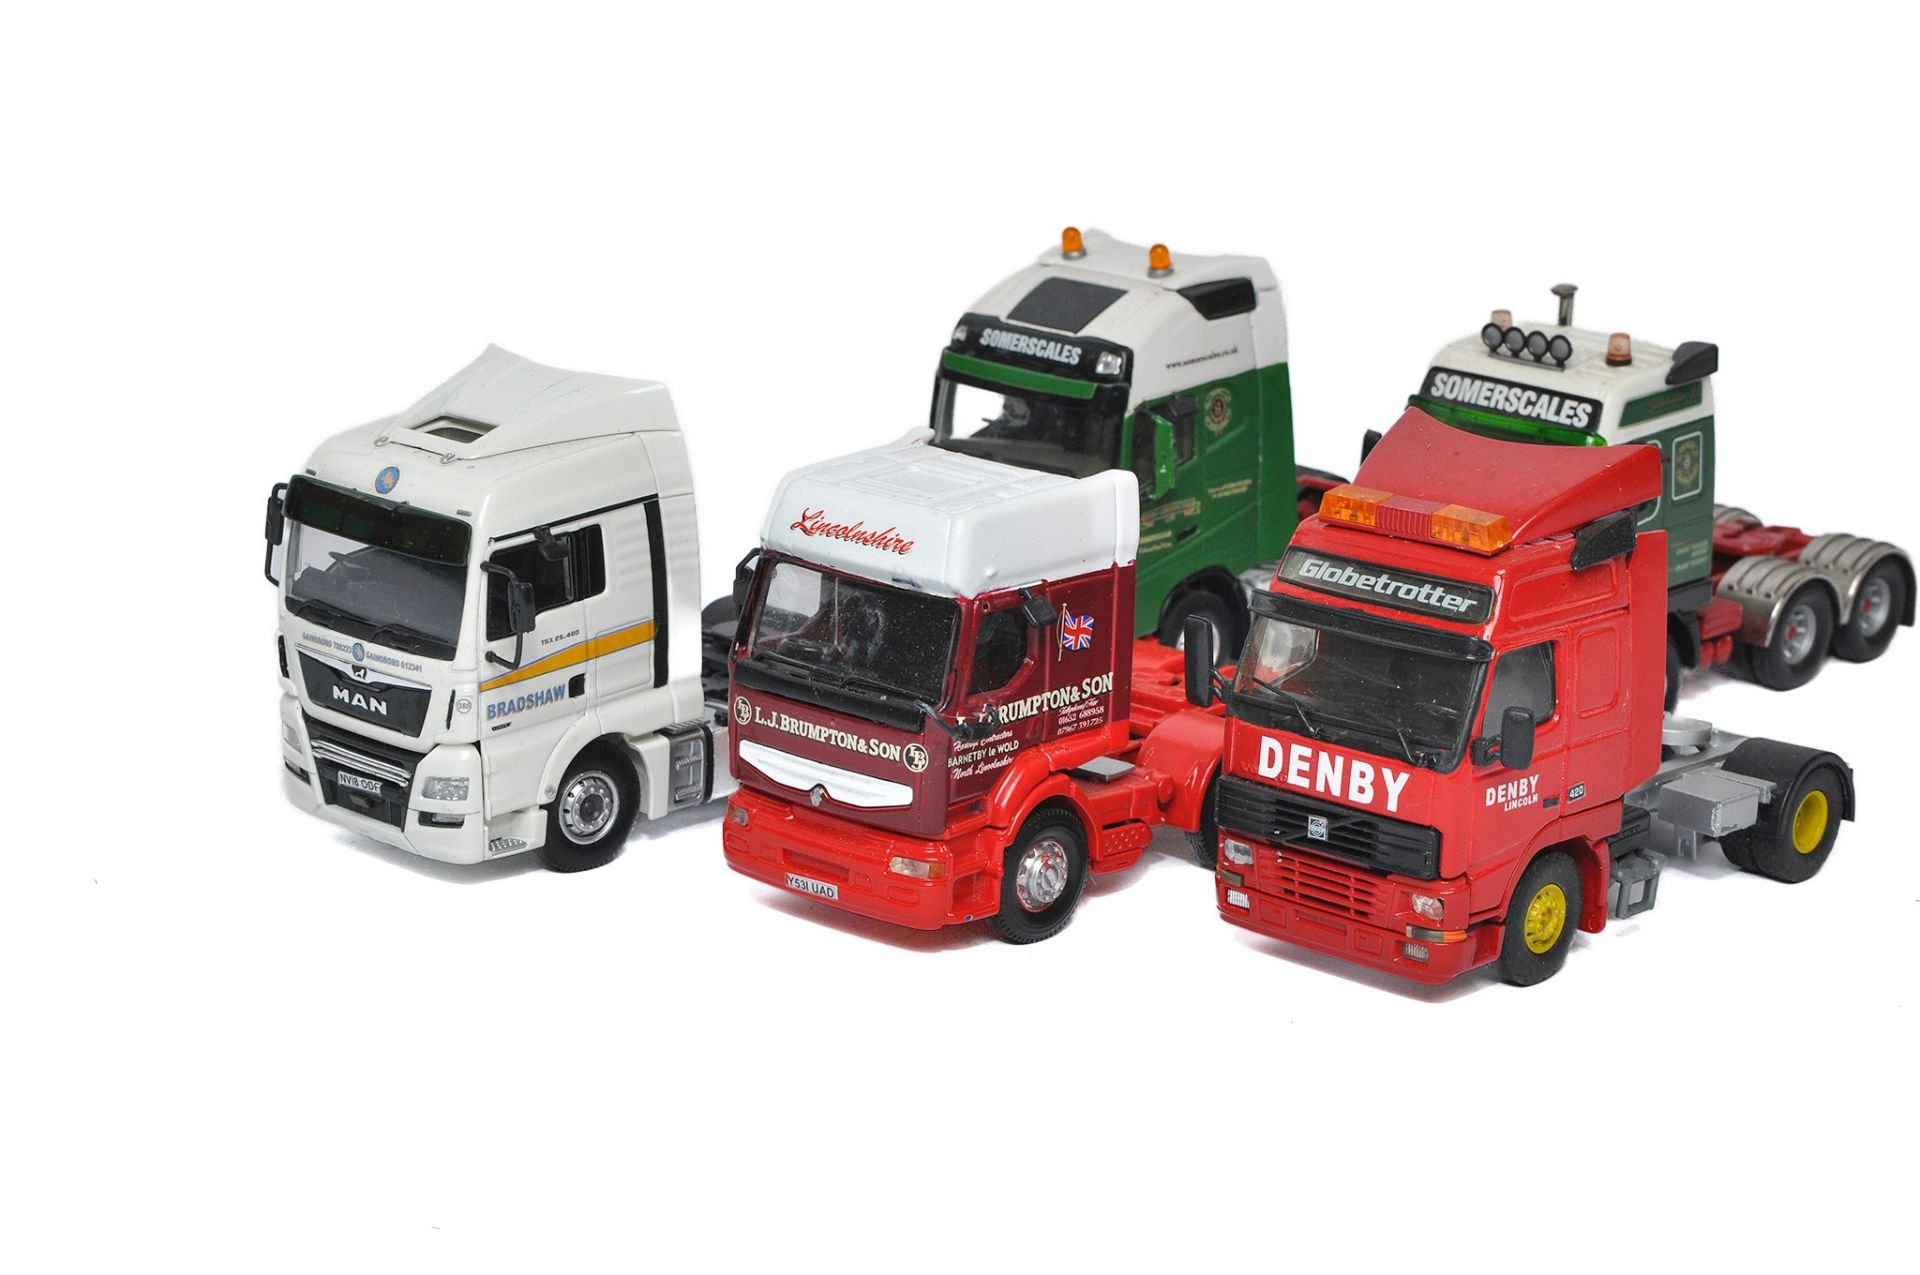 Corgi / Tekno / Wsi Code 3 (Dave Robinson) 1/50 diecast model truck issues comprising various